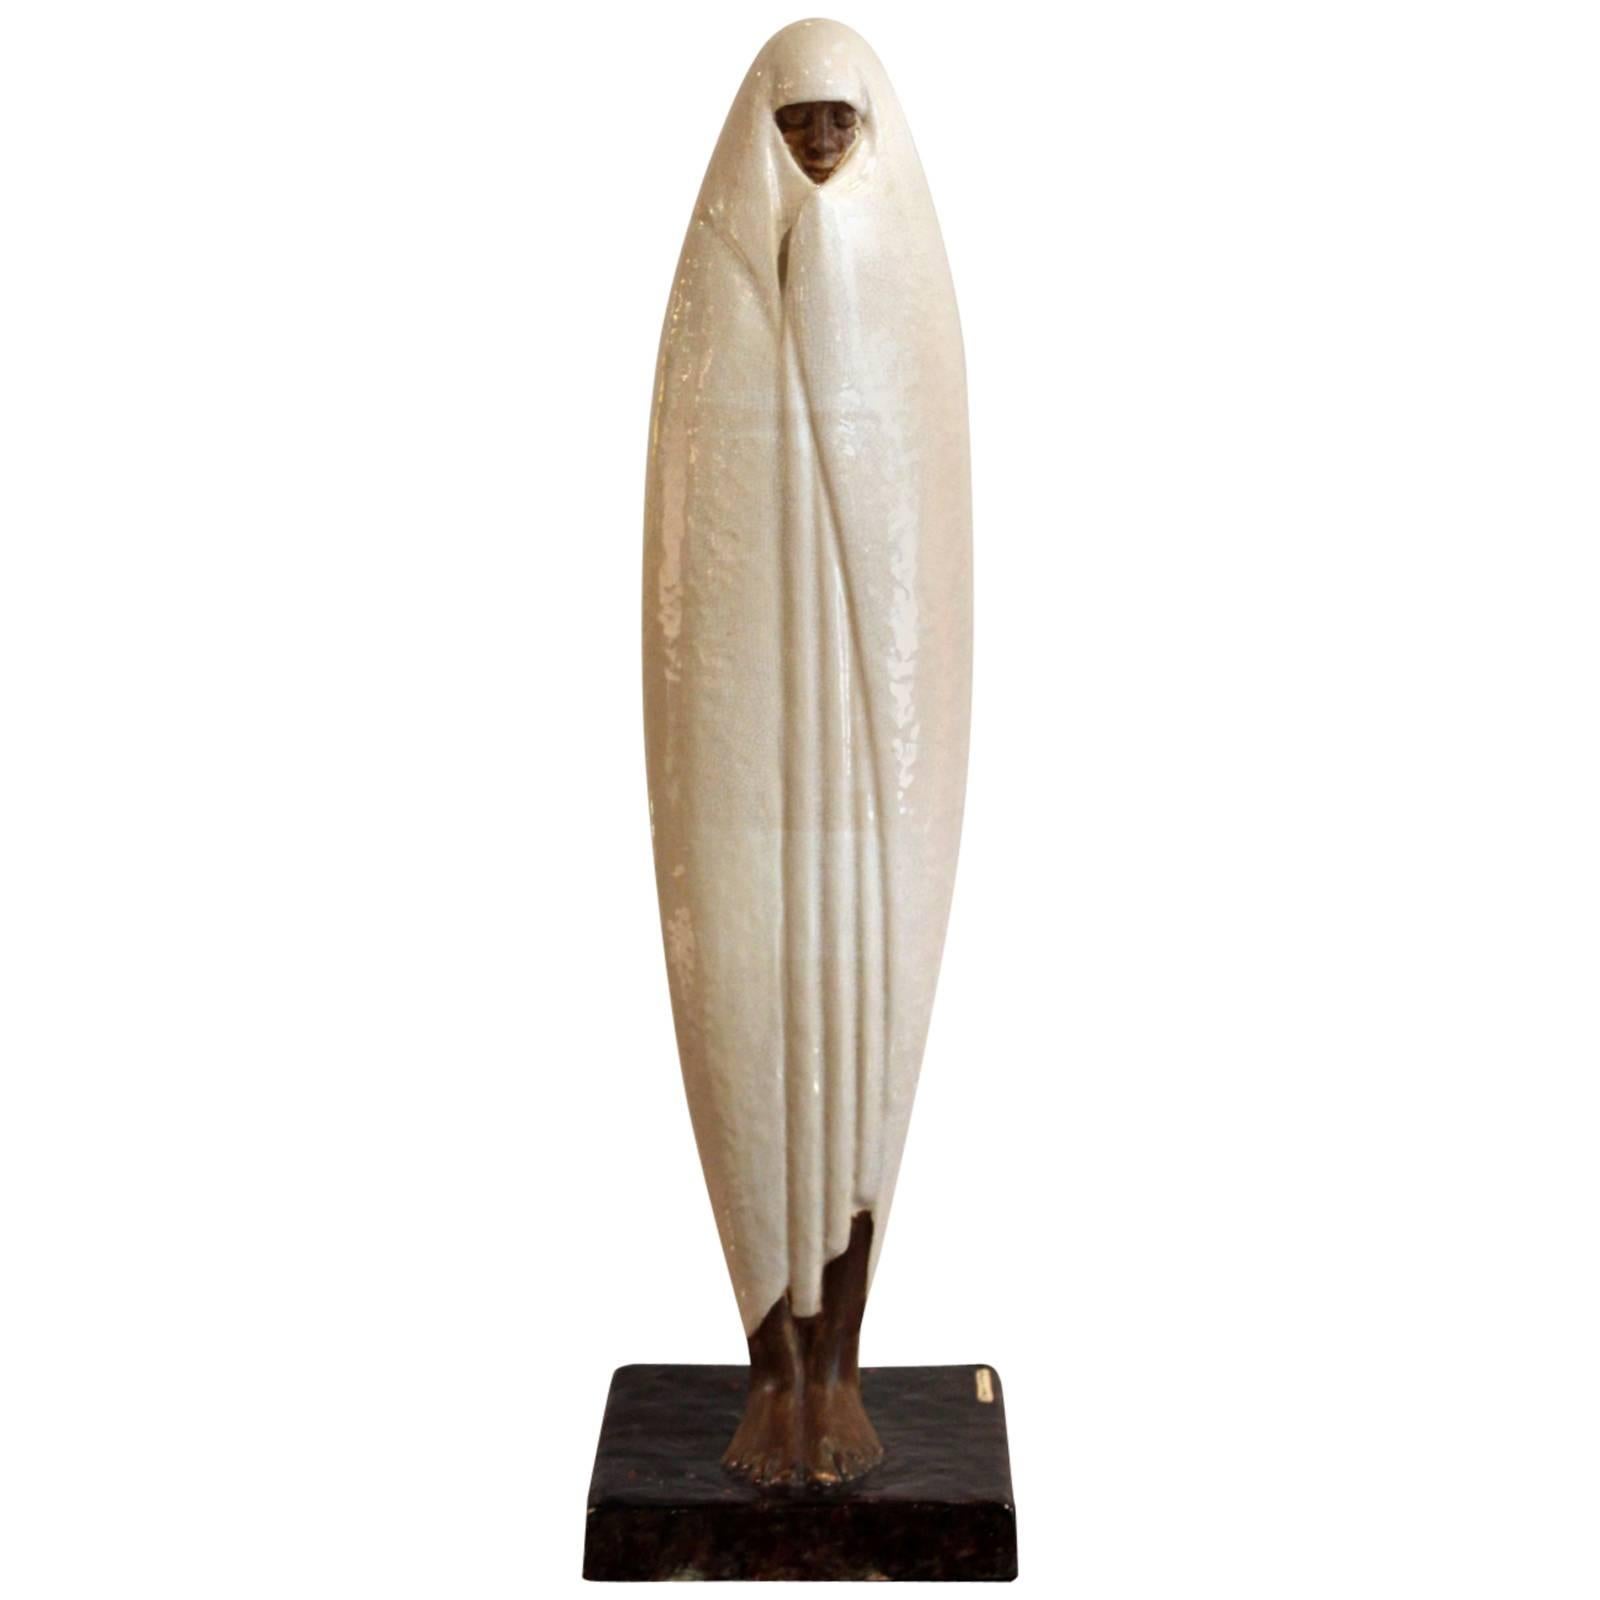 Striking Ceramic and Glazed Sculpture "La Femme De Marrakech" by Celine La Page